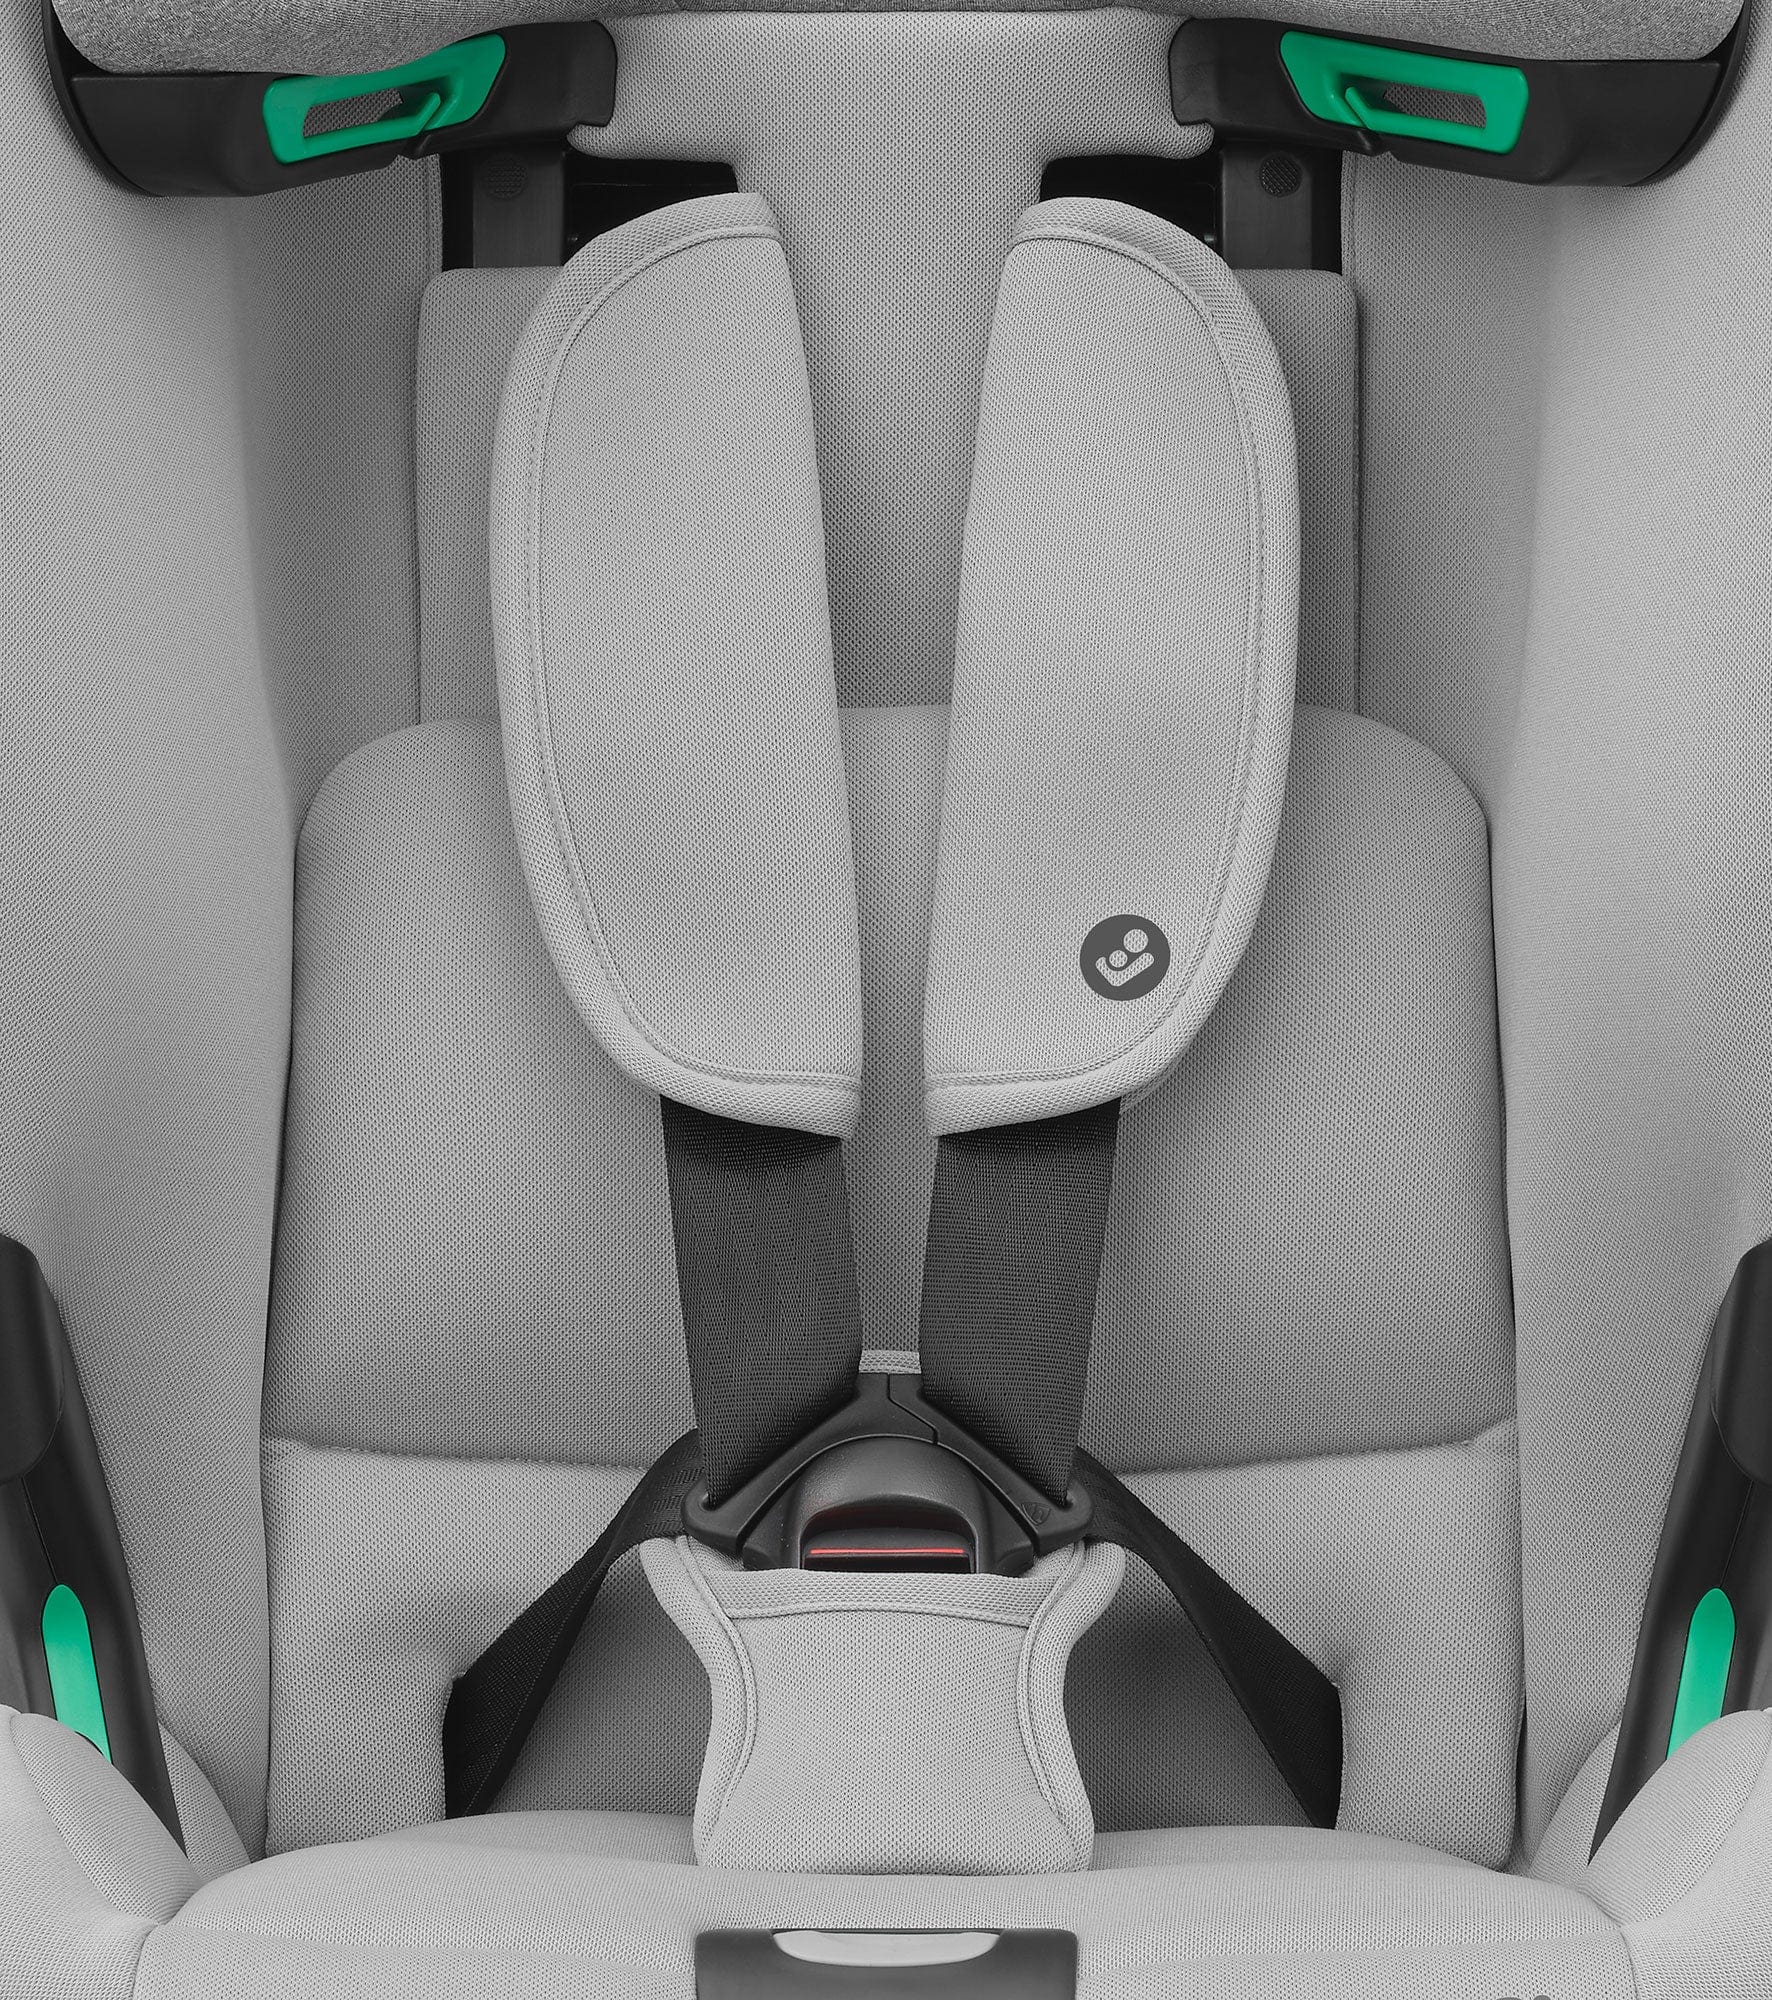 Maxi-Cosi Titan Plus i-Size Car Seat in Authentic Grey Toddler Car Seats 8836510110 8712930183709